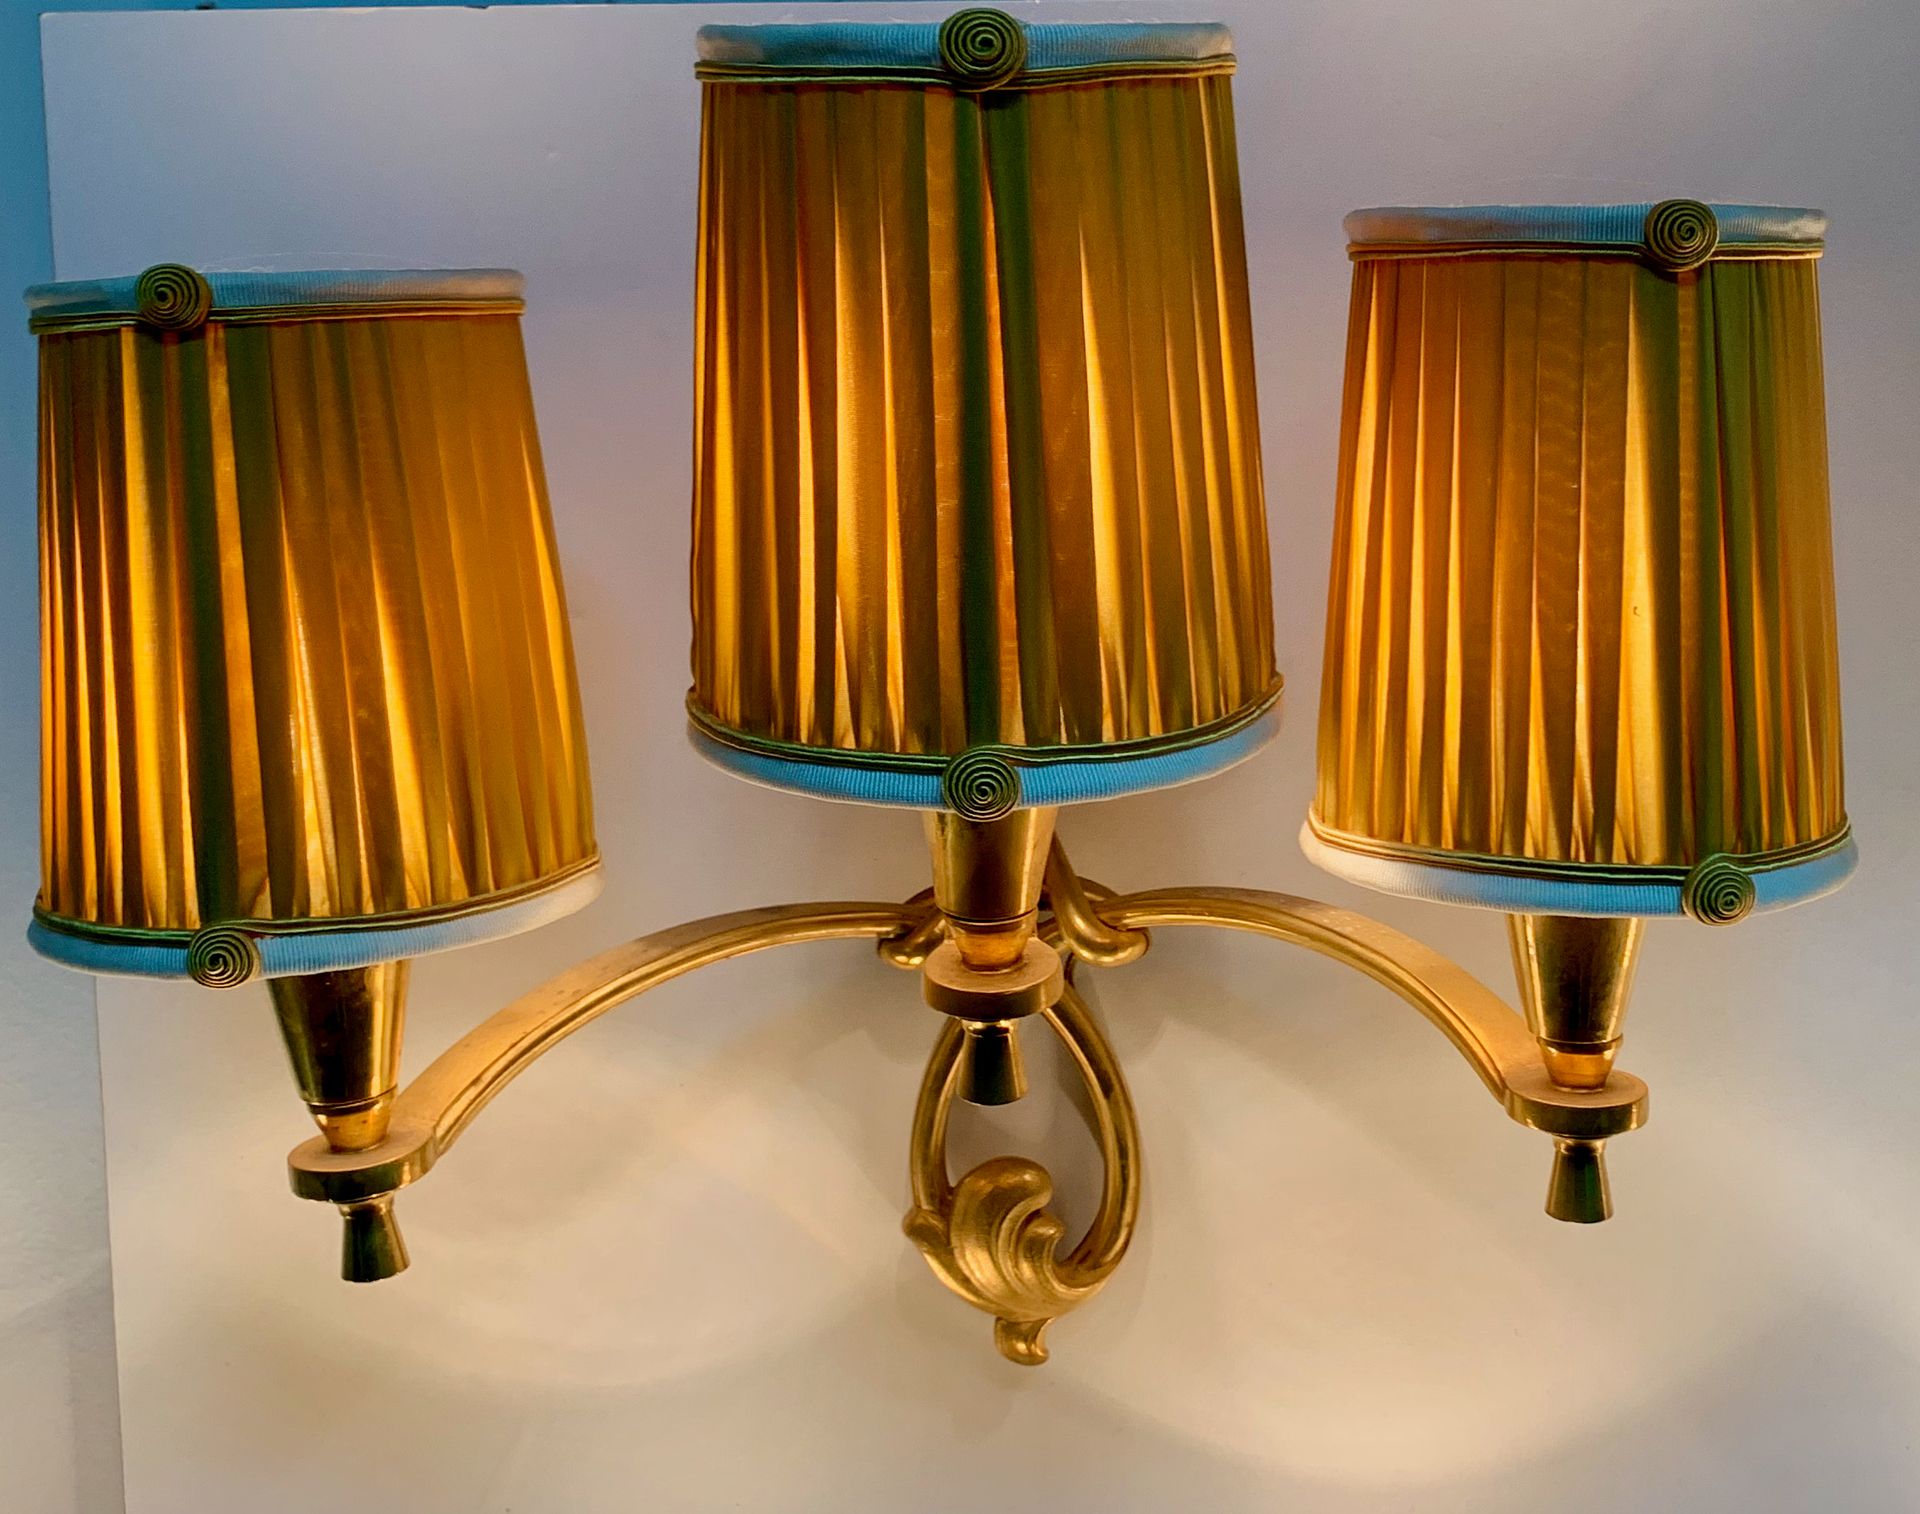 Jules LELEU 
一对三臂式壁灯。鎏金青铜。
在朱尔斯-勒鲁的品味中。1930年。尺寸：40 x 32厘米左右。